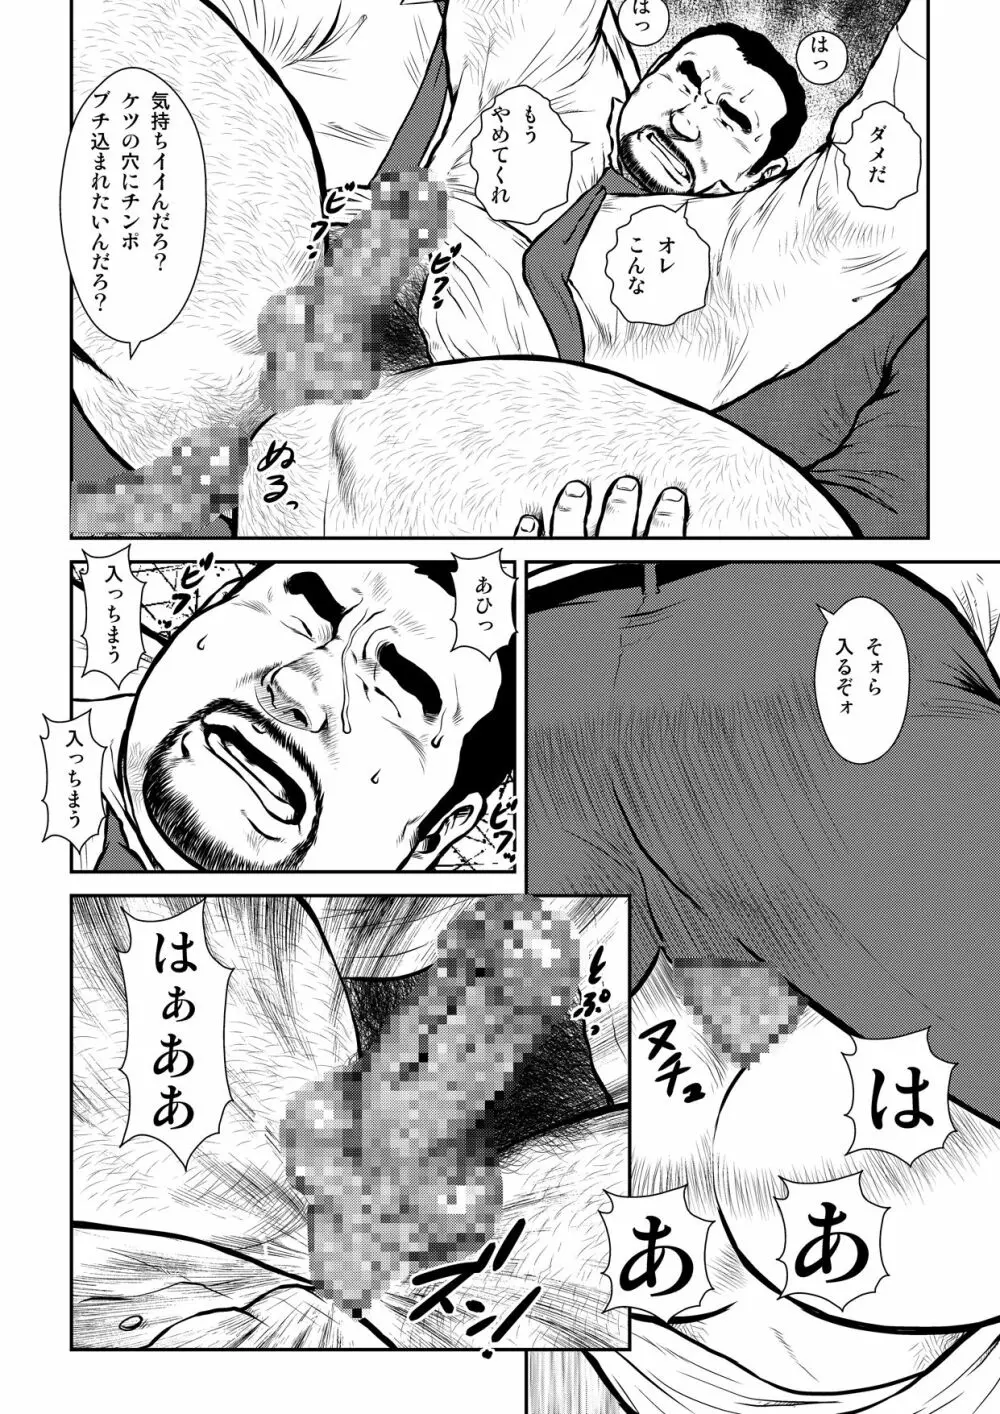 穴場2〜地下鉄〜 12ページ